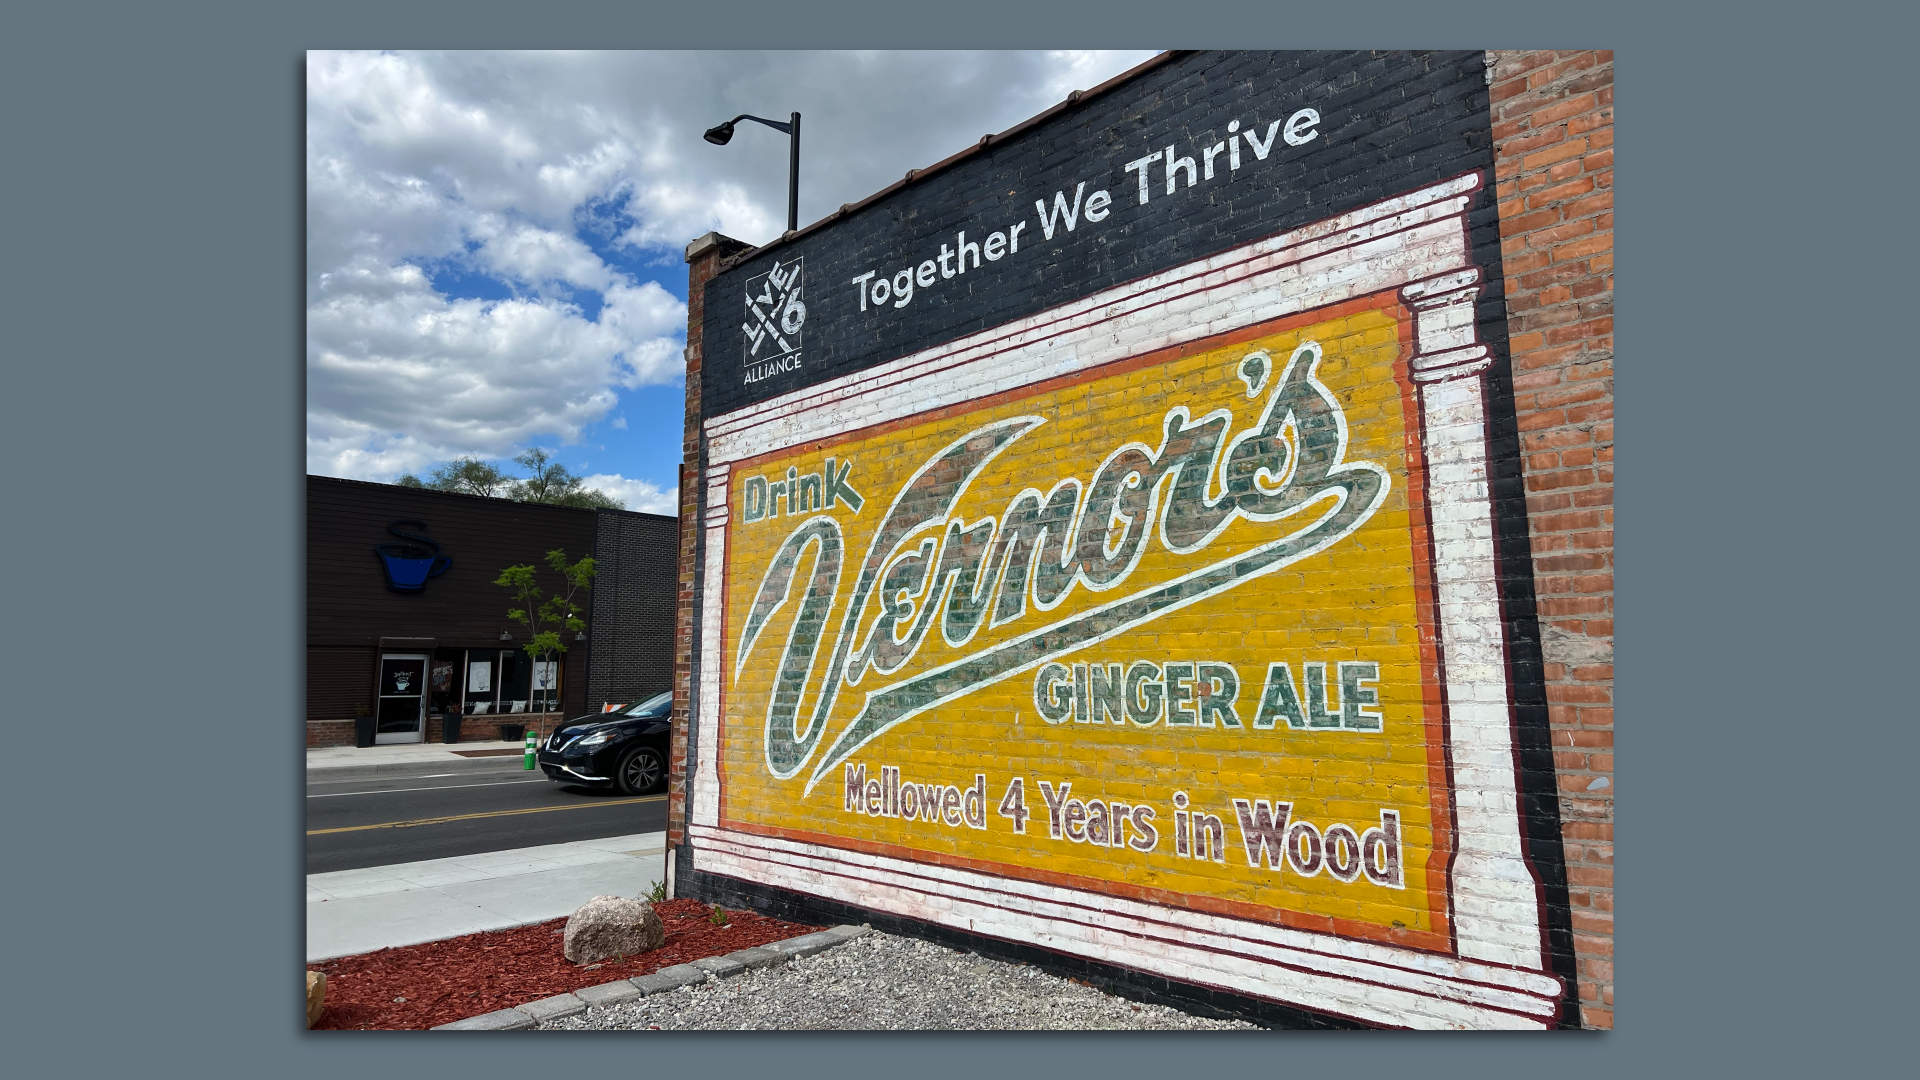 Vernor ginger ale mural on 6 Mile in Detroit